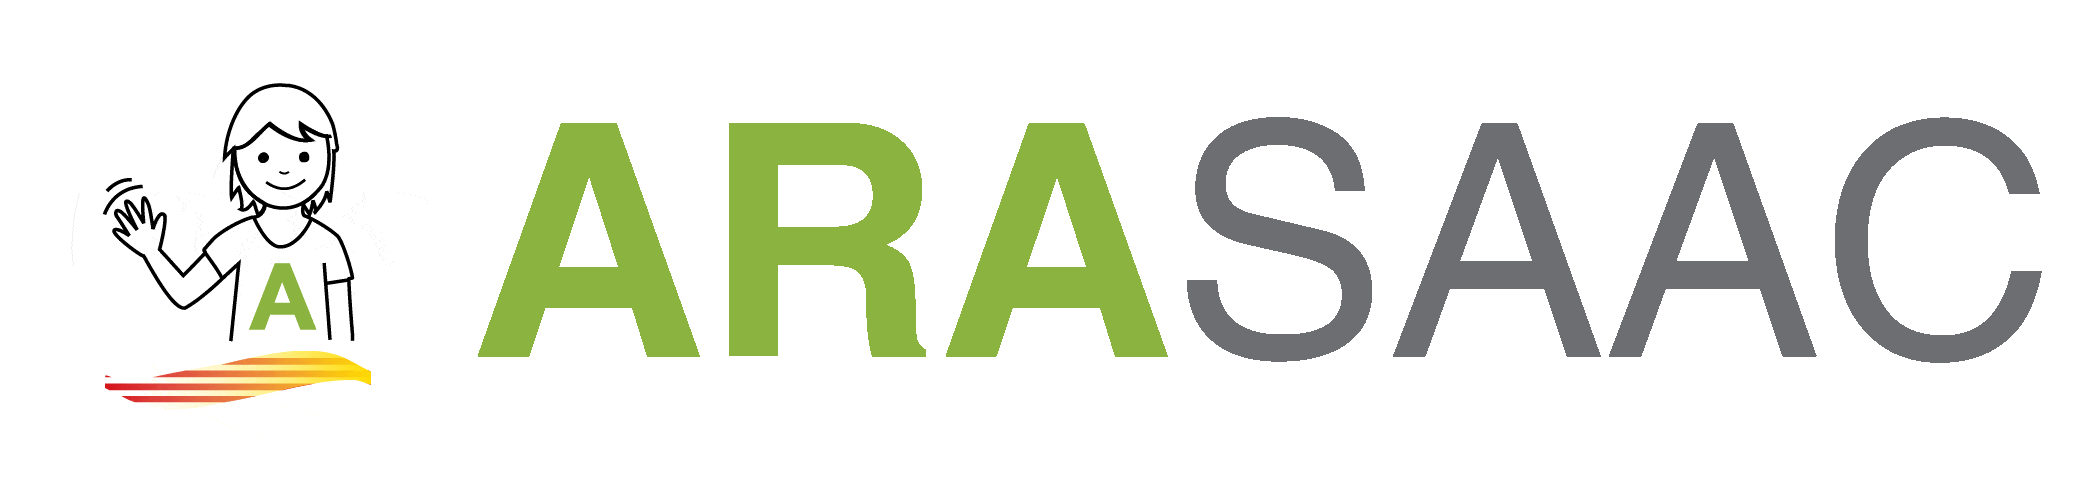 logo ARASAAC